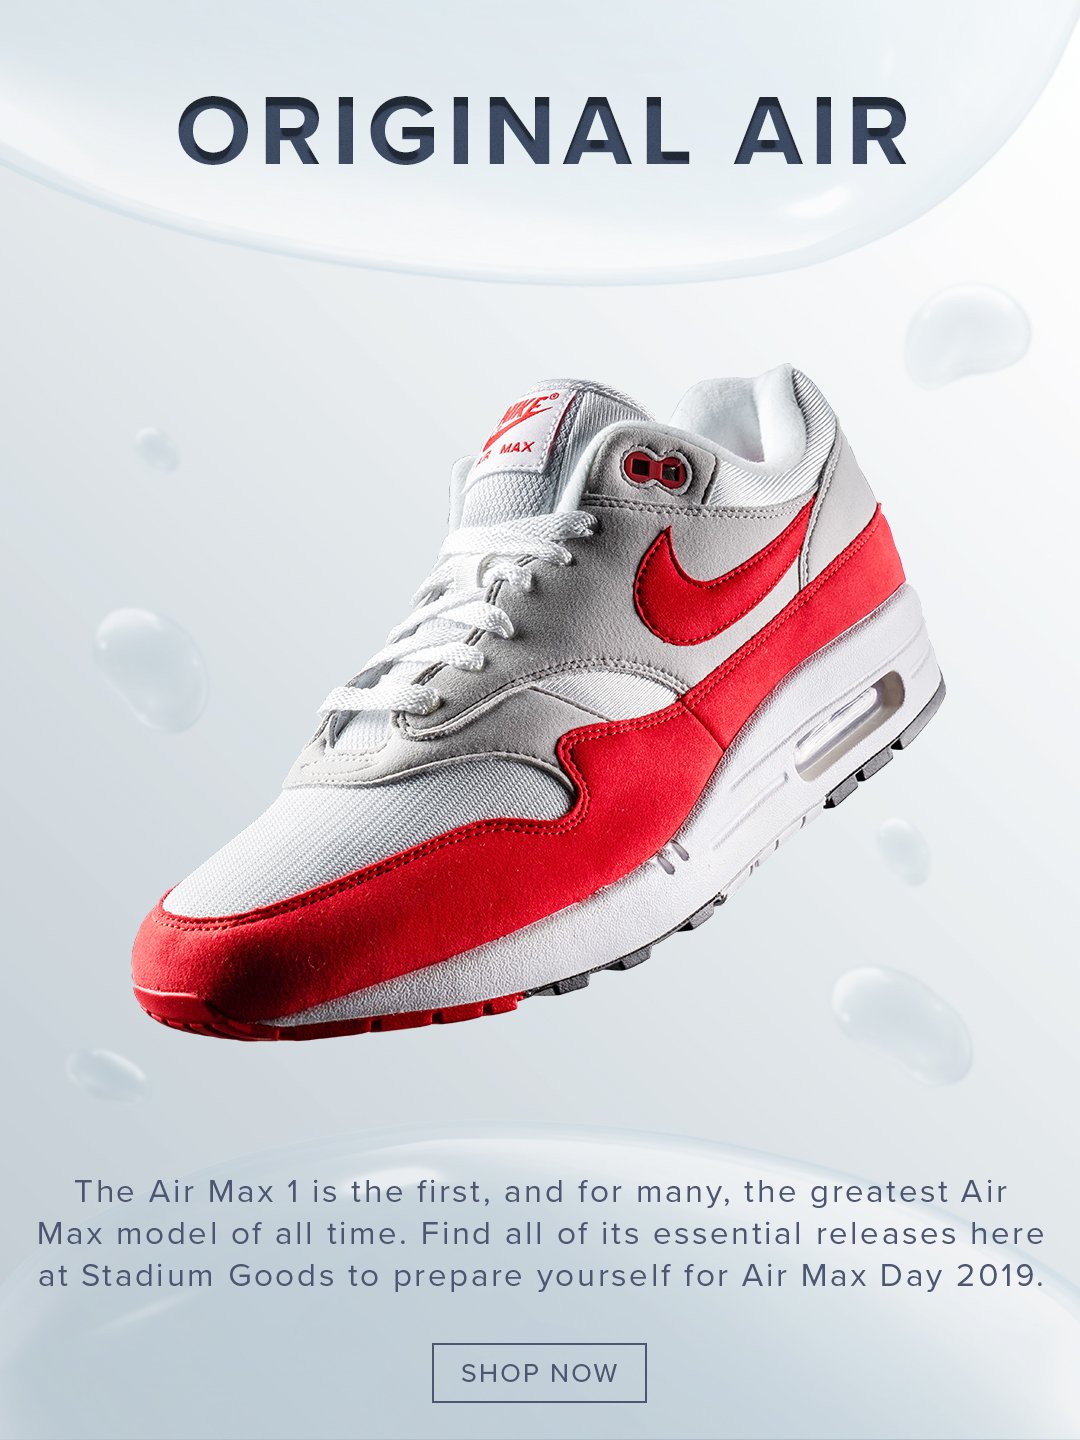 Every essential Nike Air Max 1 